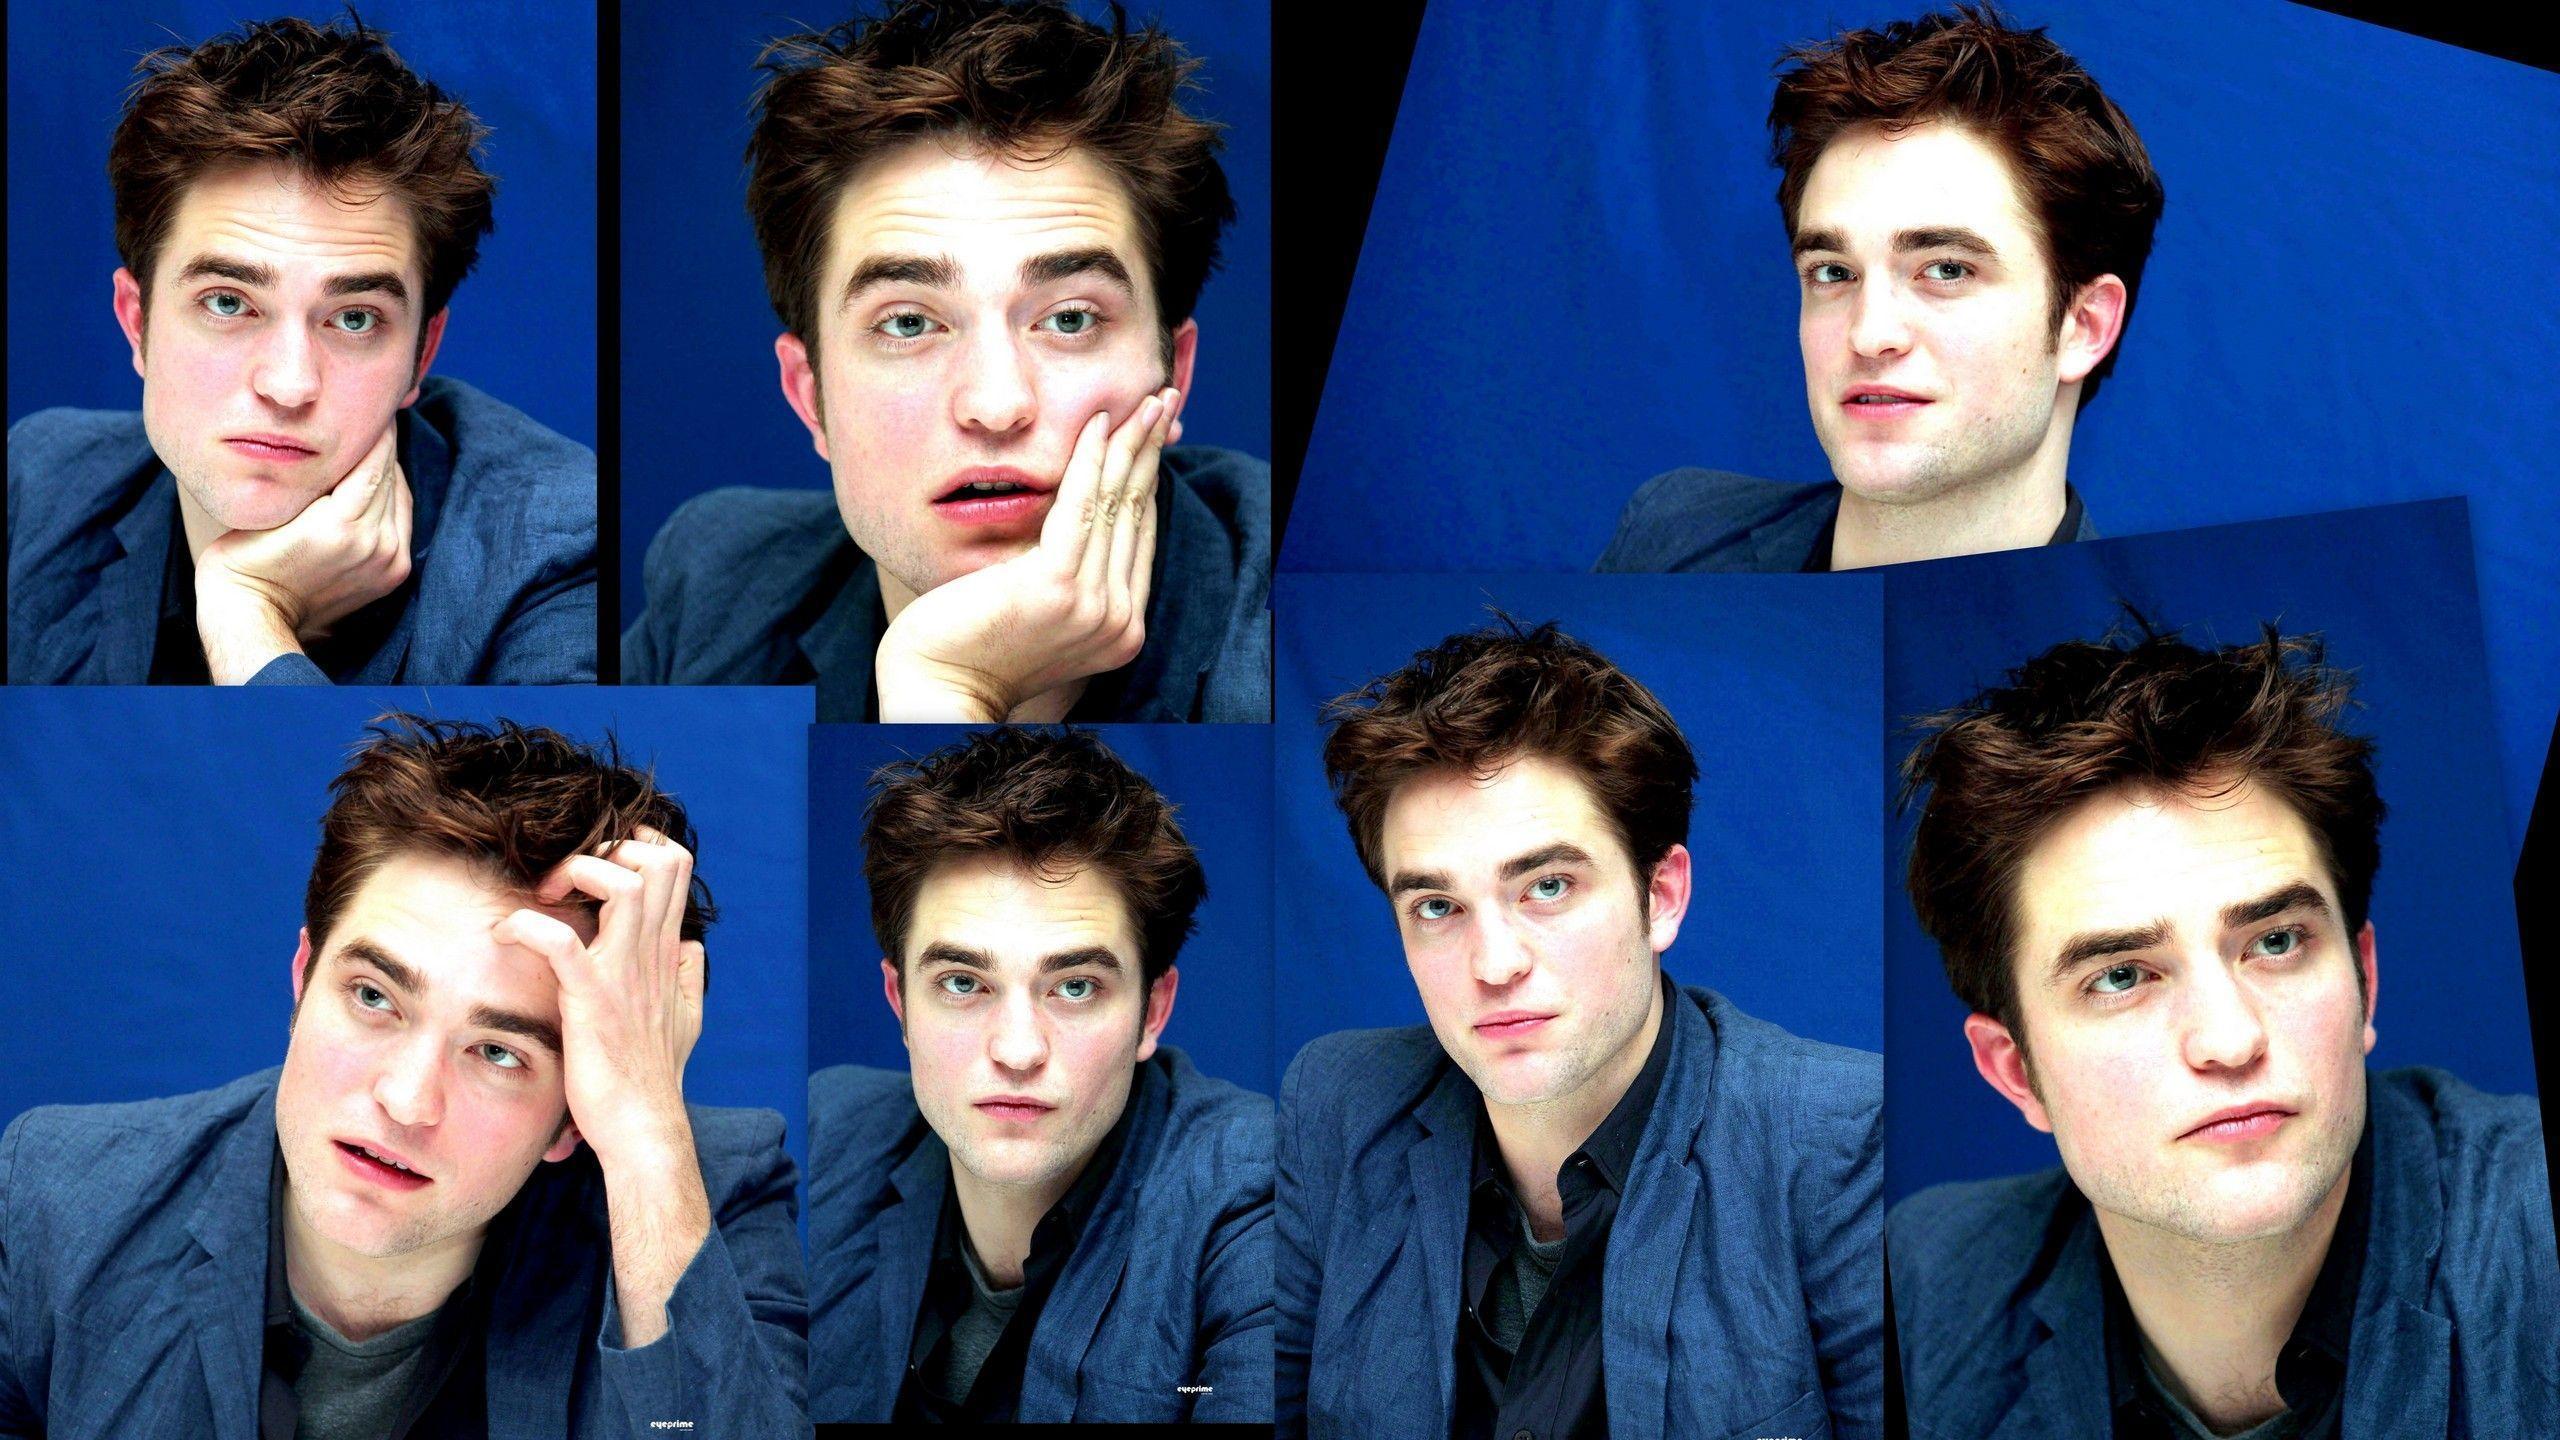 Robert Pattinson Twilight Wallpapers - Wallpaper Cave